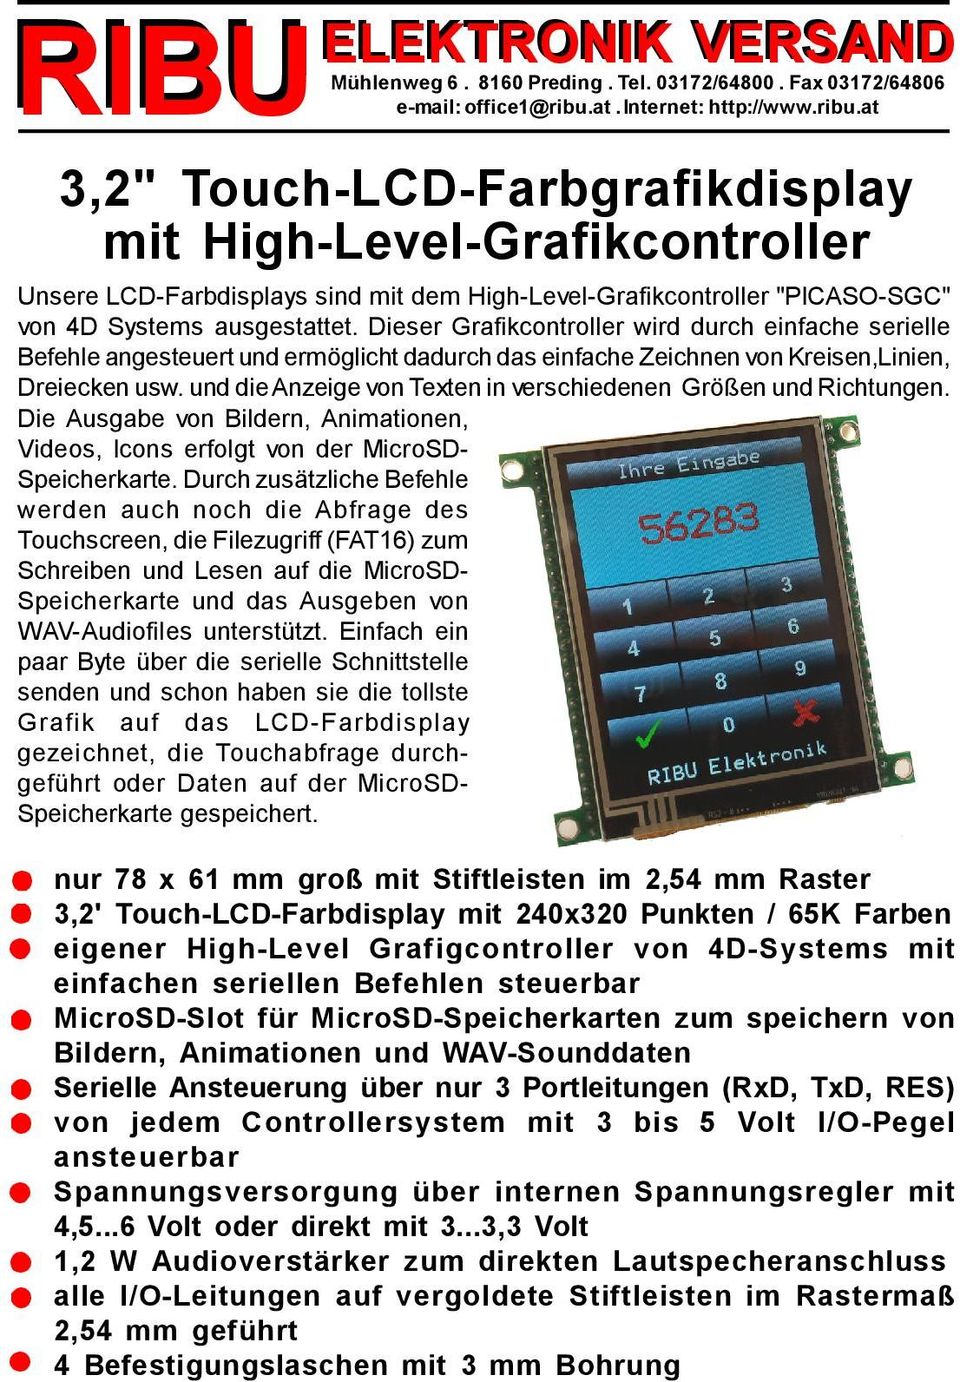 at 3,2" Touch-LCD-Farbgrafikdisplay mit High-Level-Grafikcontroller Unsere LCD-Farbdisplays sind mit dem High-Level-Grafikcontroller "PICASO-SGC" von 4D Systems ausgestattet.